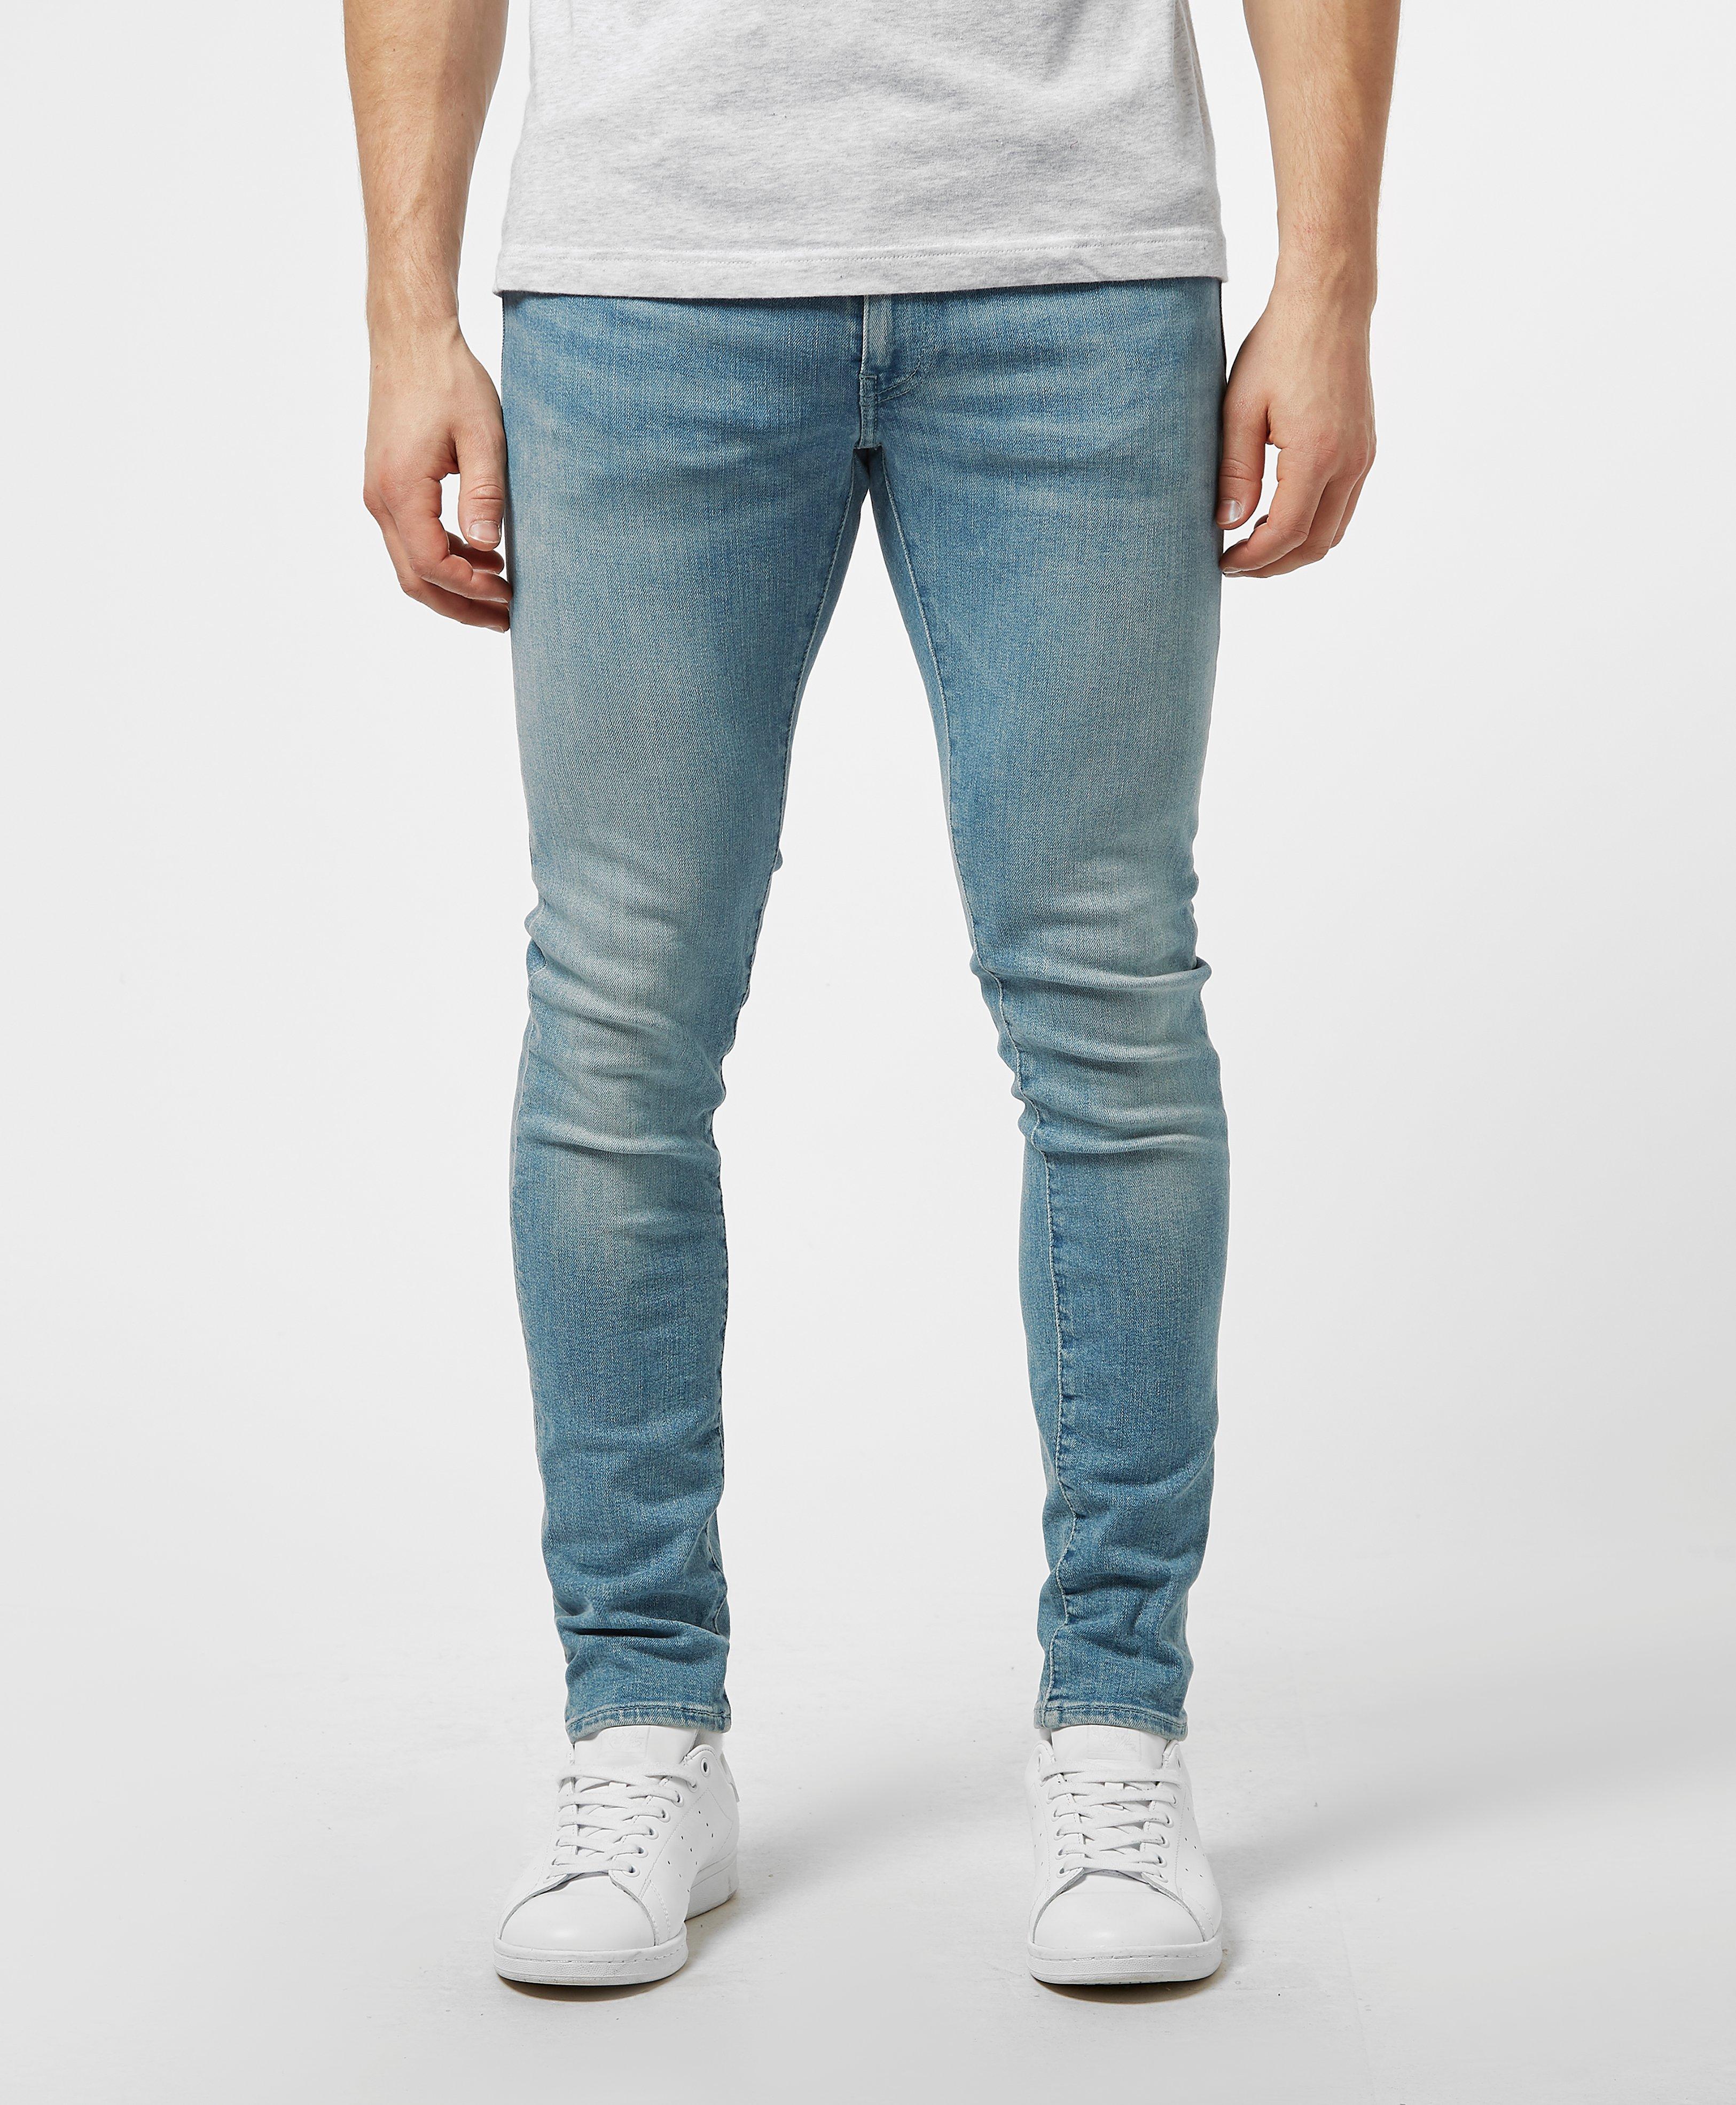 Levi's Denim 519 Skinny Jeans in Blue for Men - Lyst